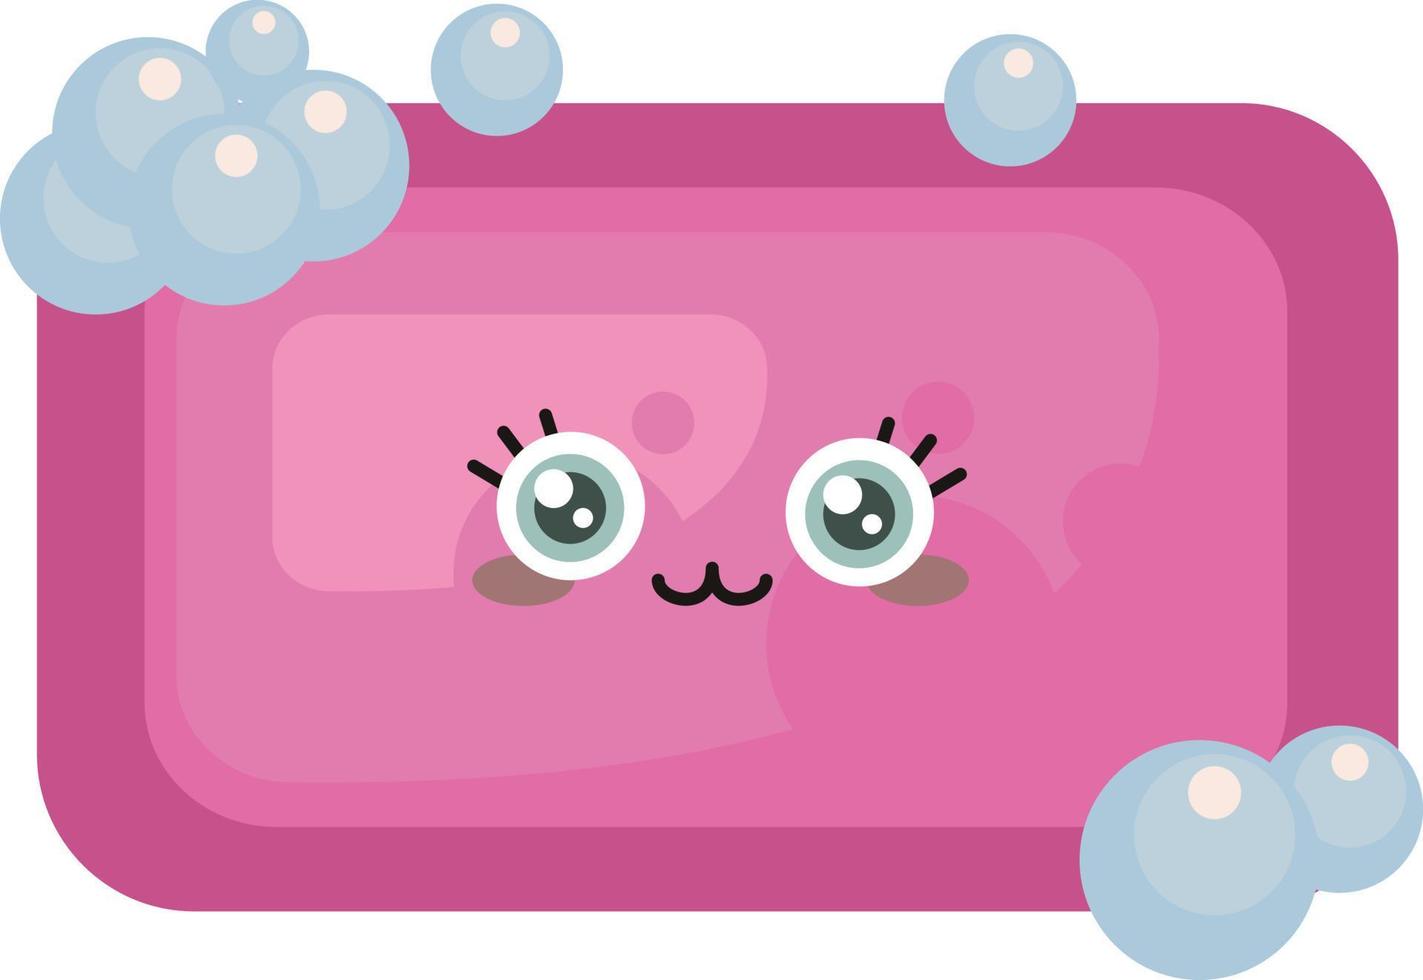 Pink soap, illustration, vector on white background